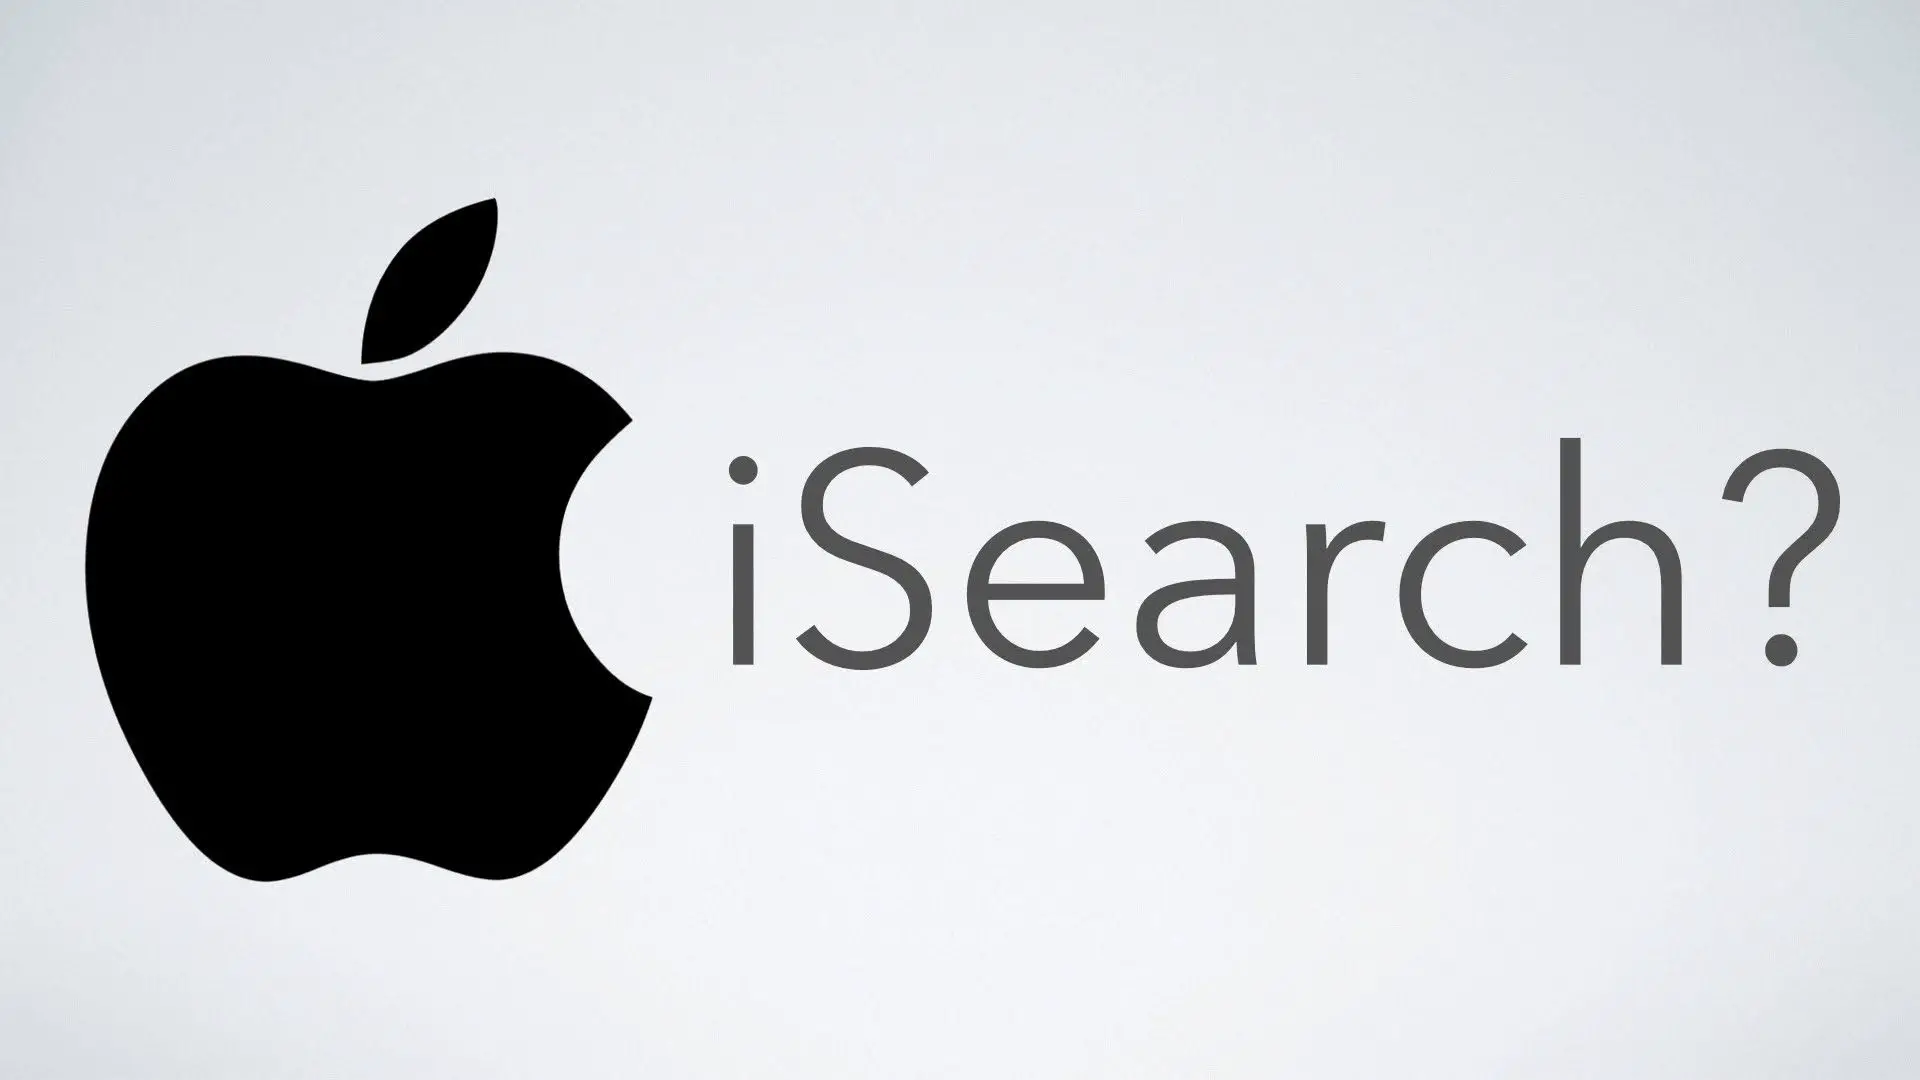 Apple inc iphone. Эмблема Apple. Логотип айфона. Objective-c. Логотип фирмы Эппл.